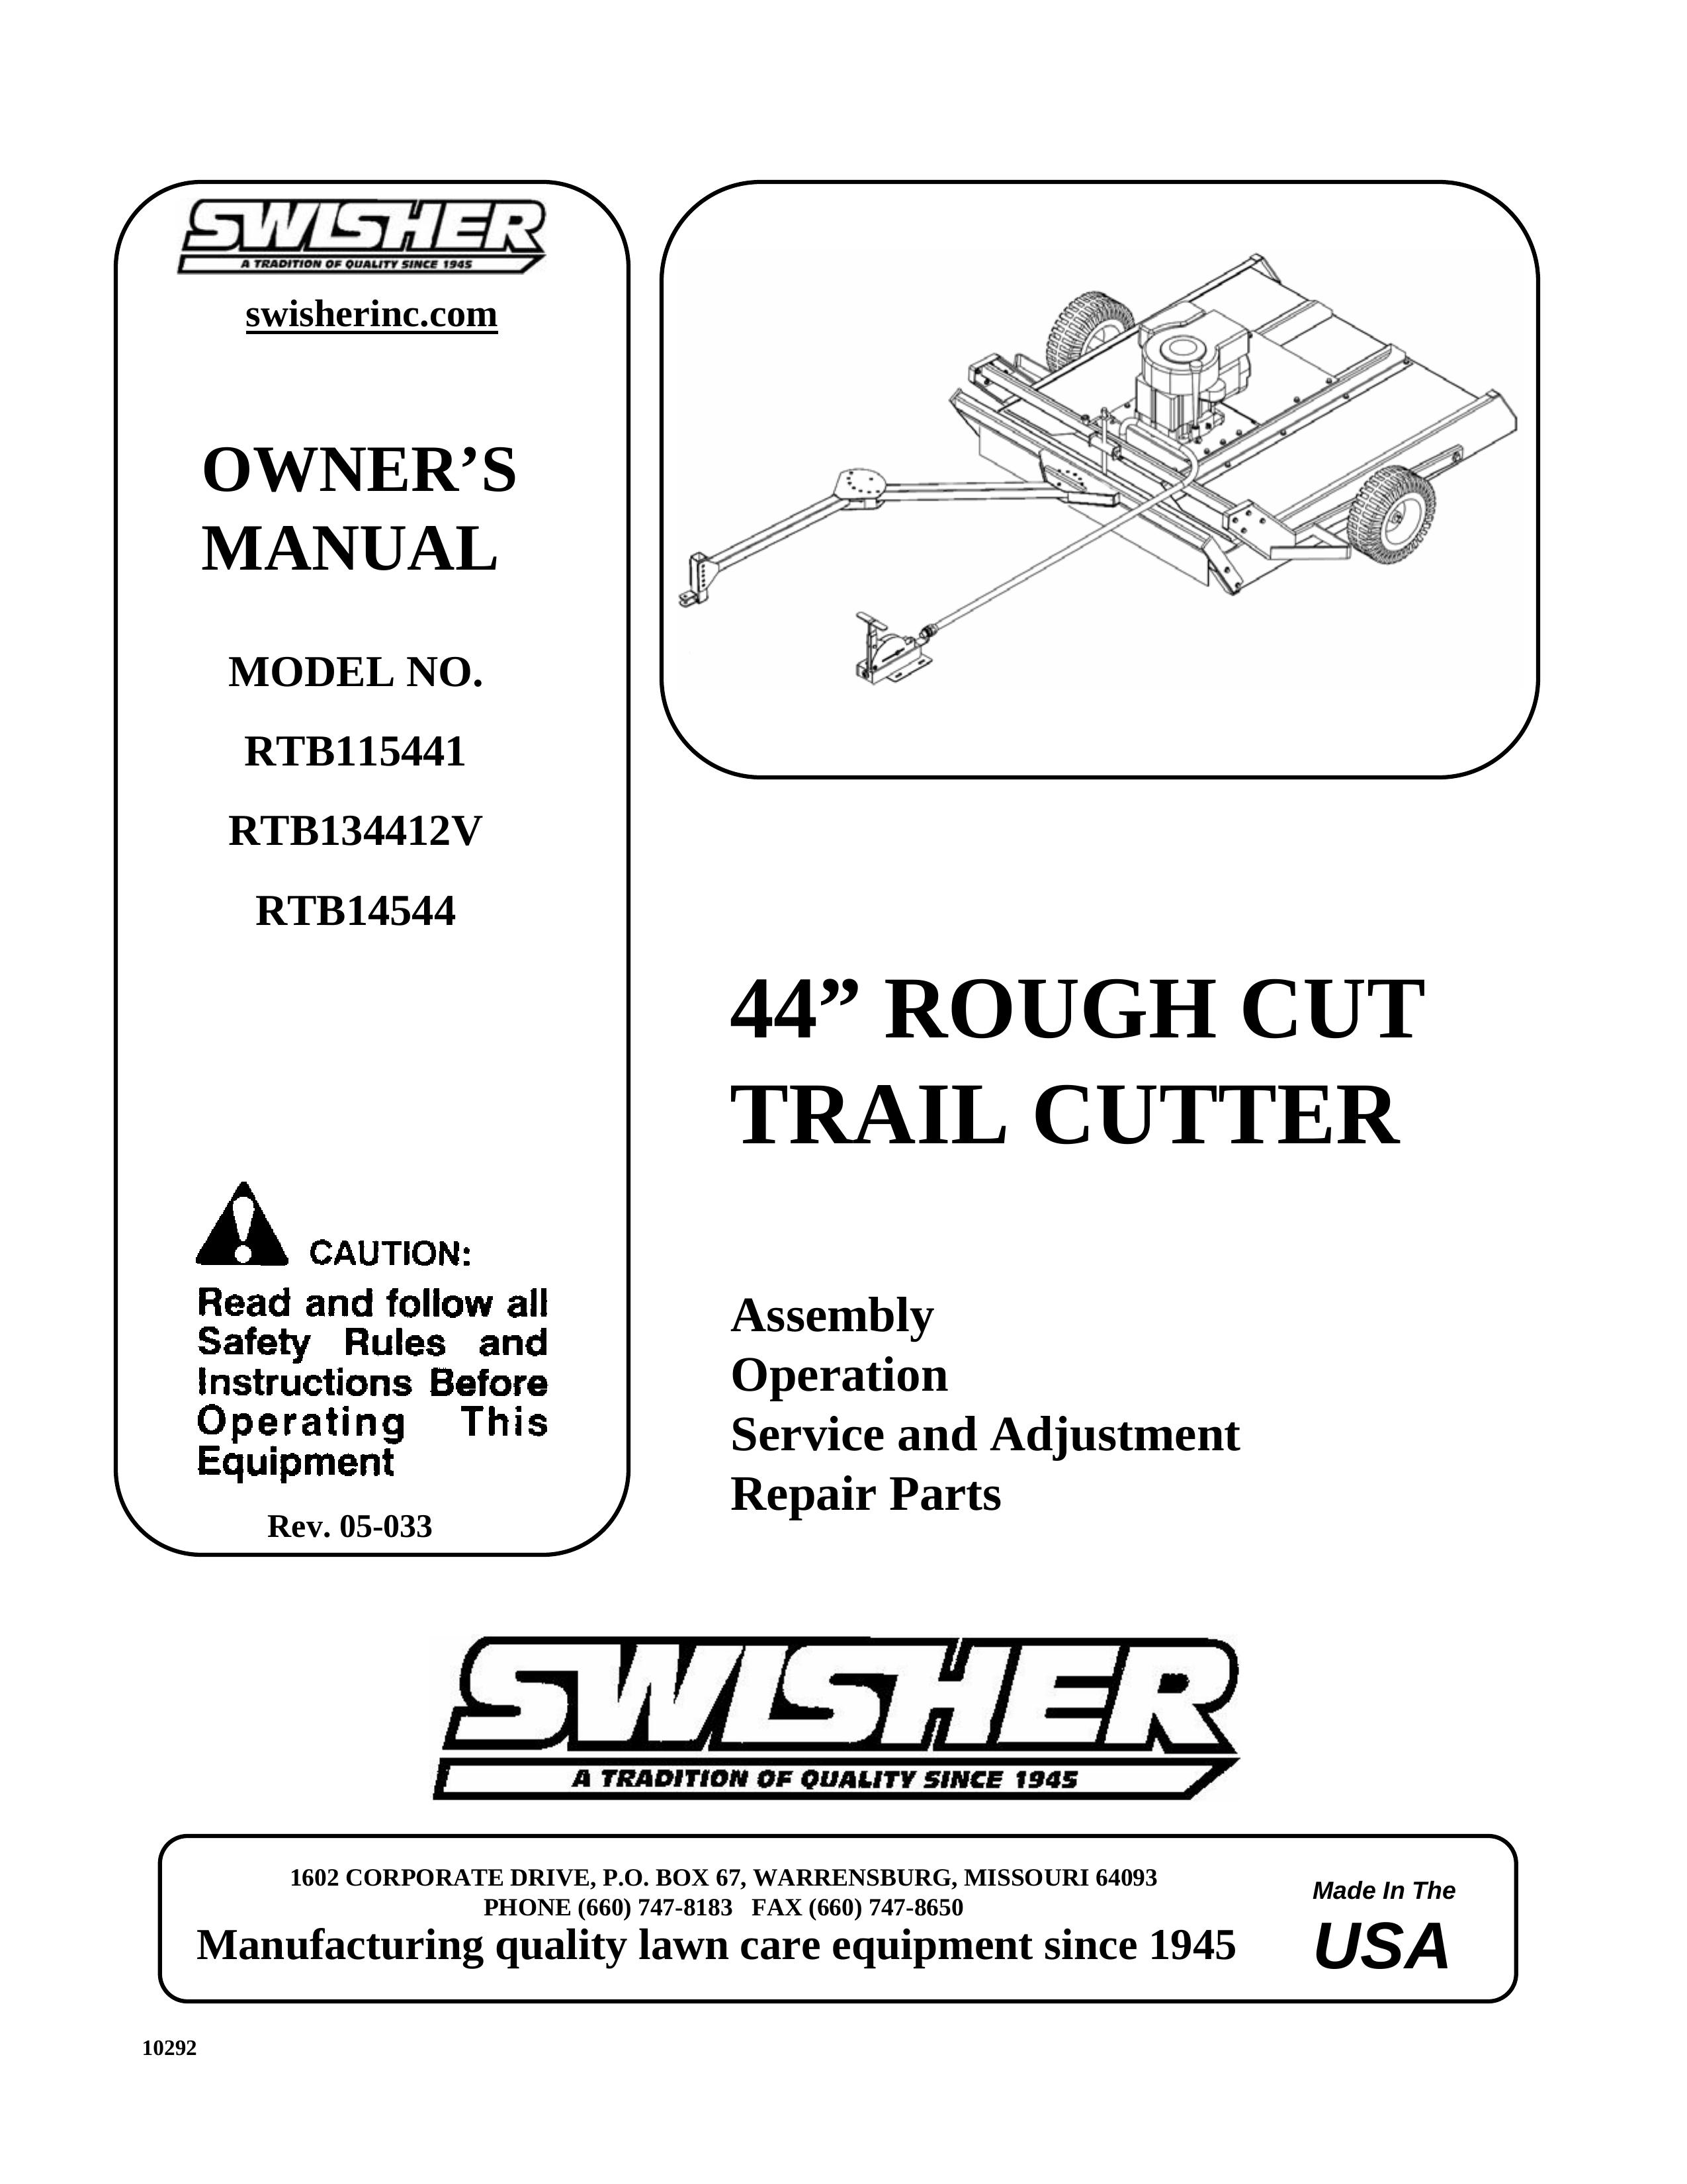 Swisher RTB134412V Lawn Mower User Manual